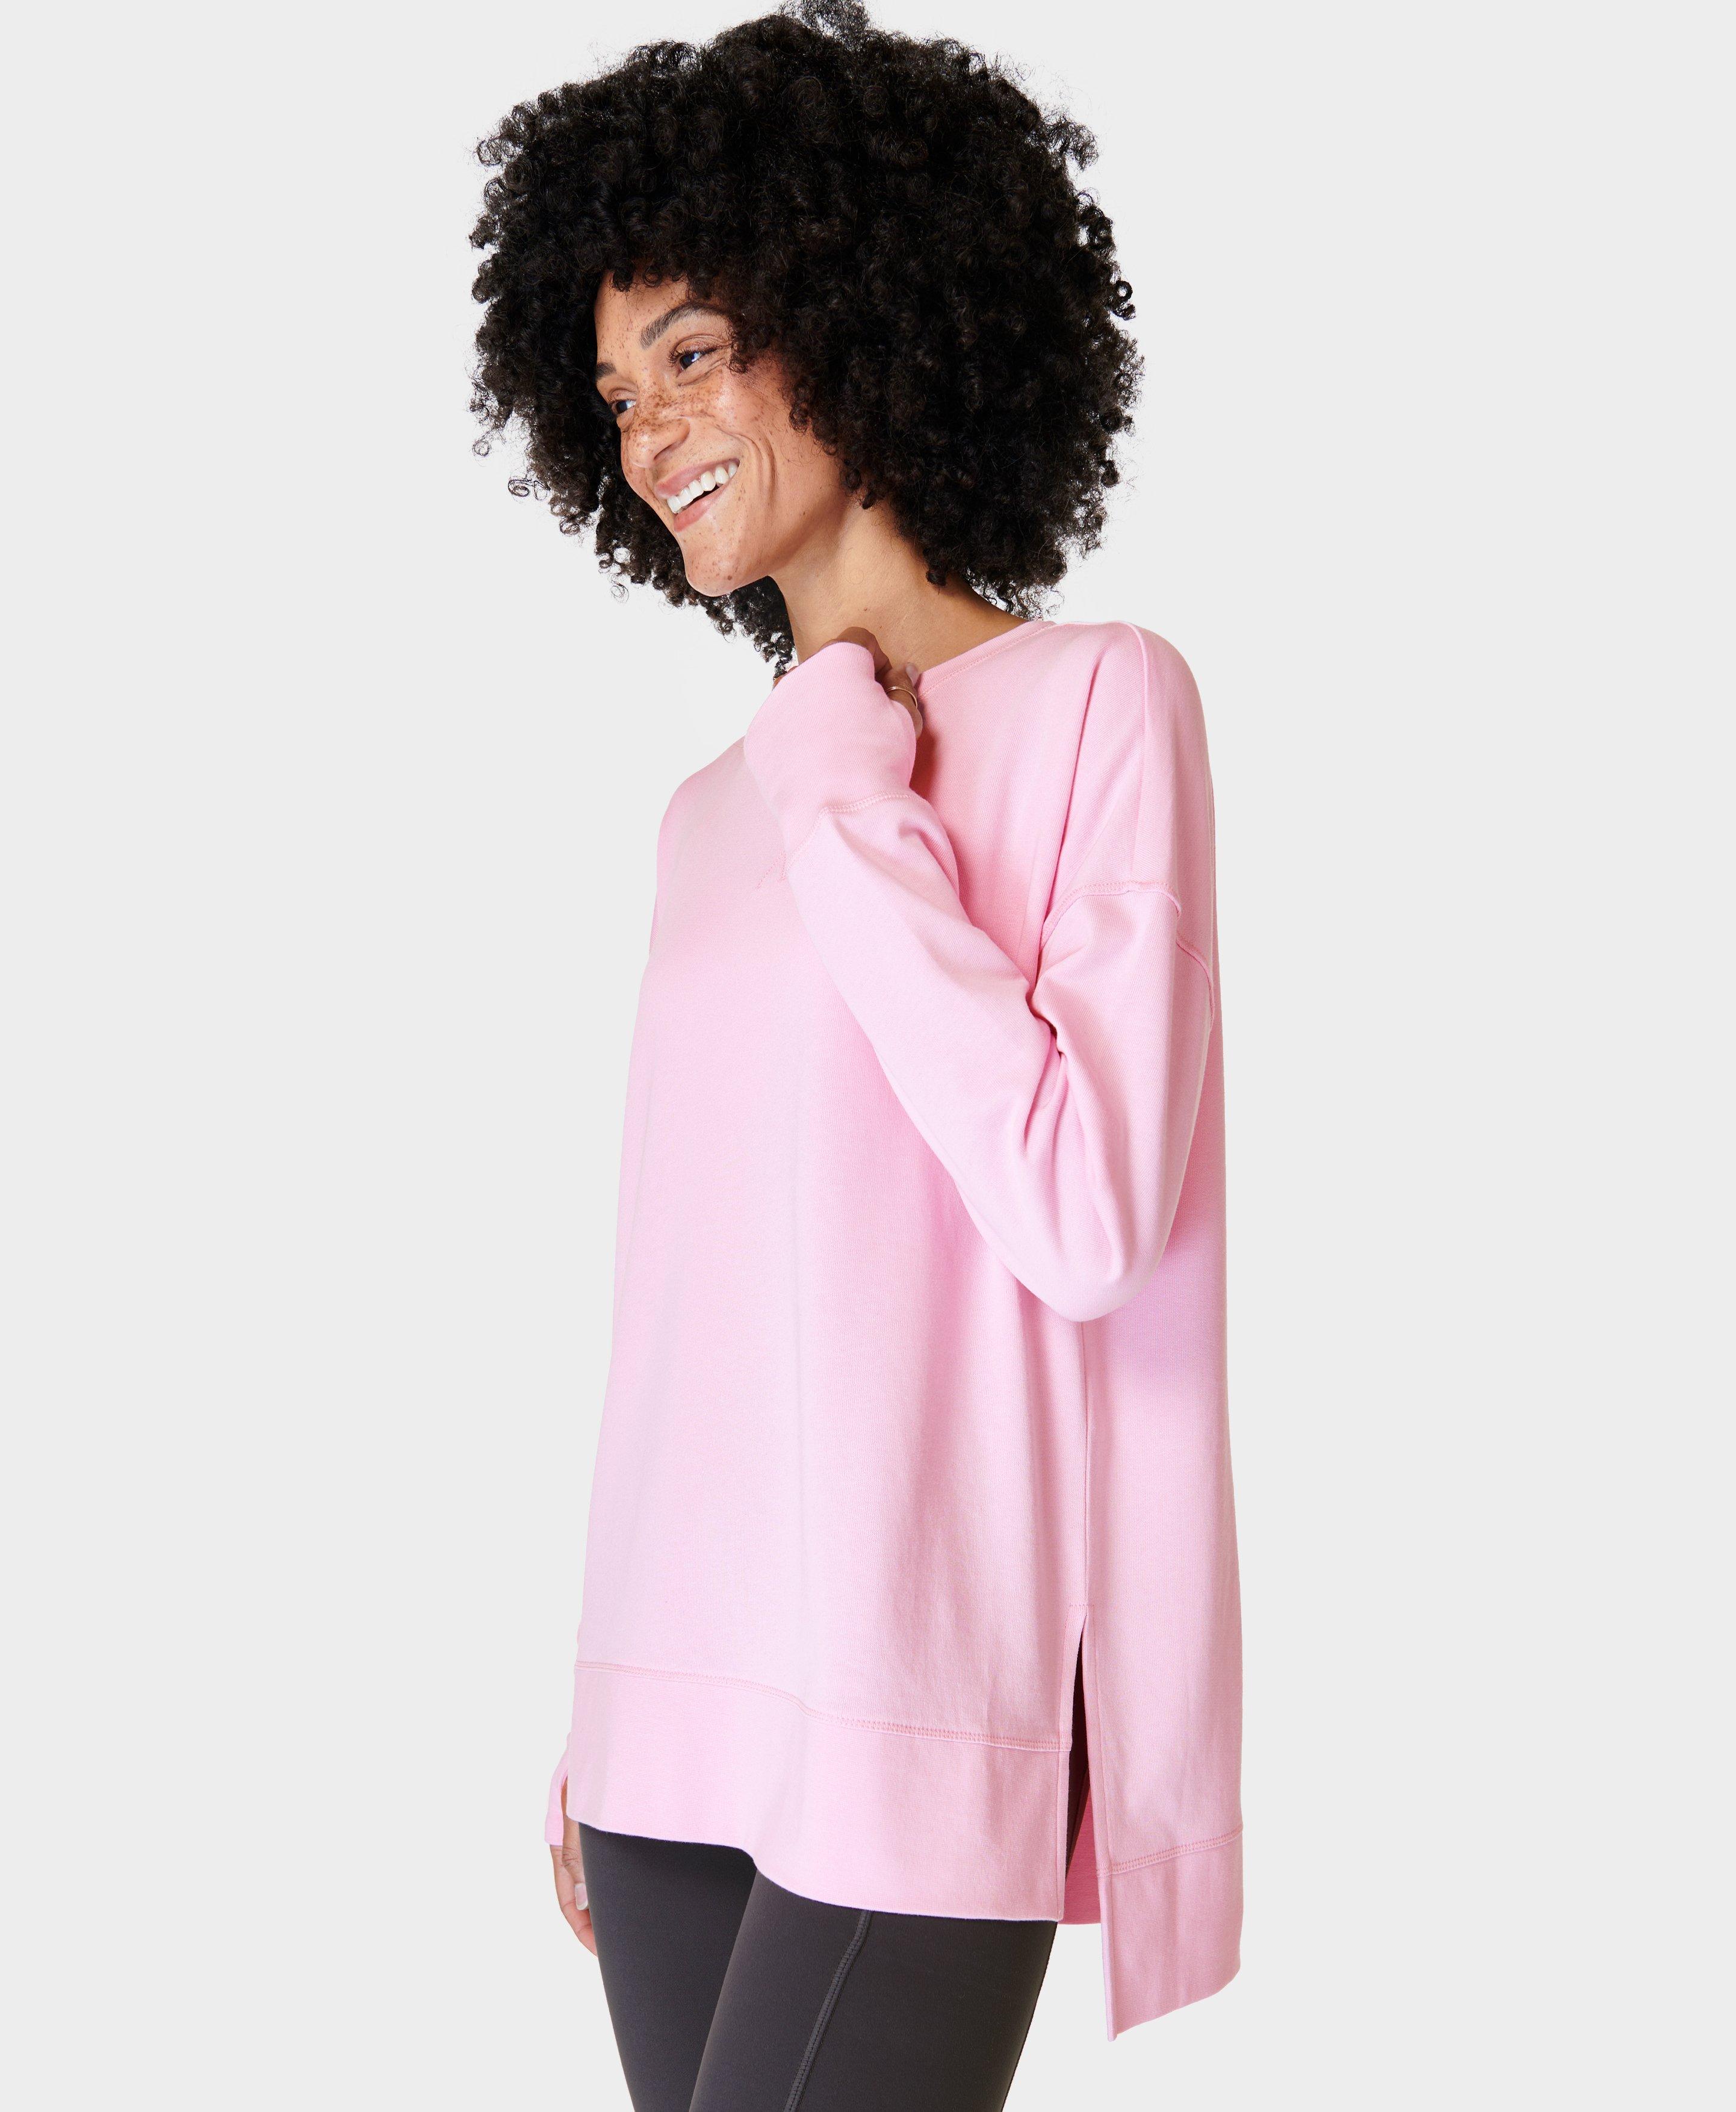 After Class Longline Sweatshirt - Chalk Pink